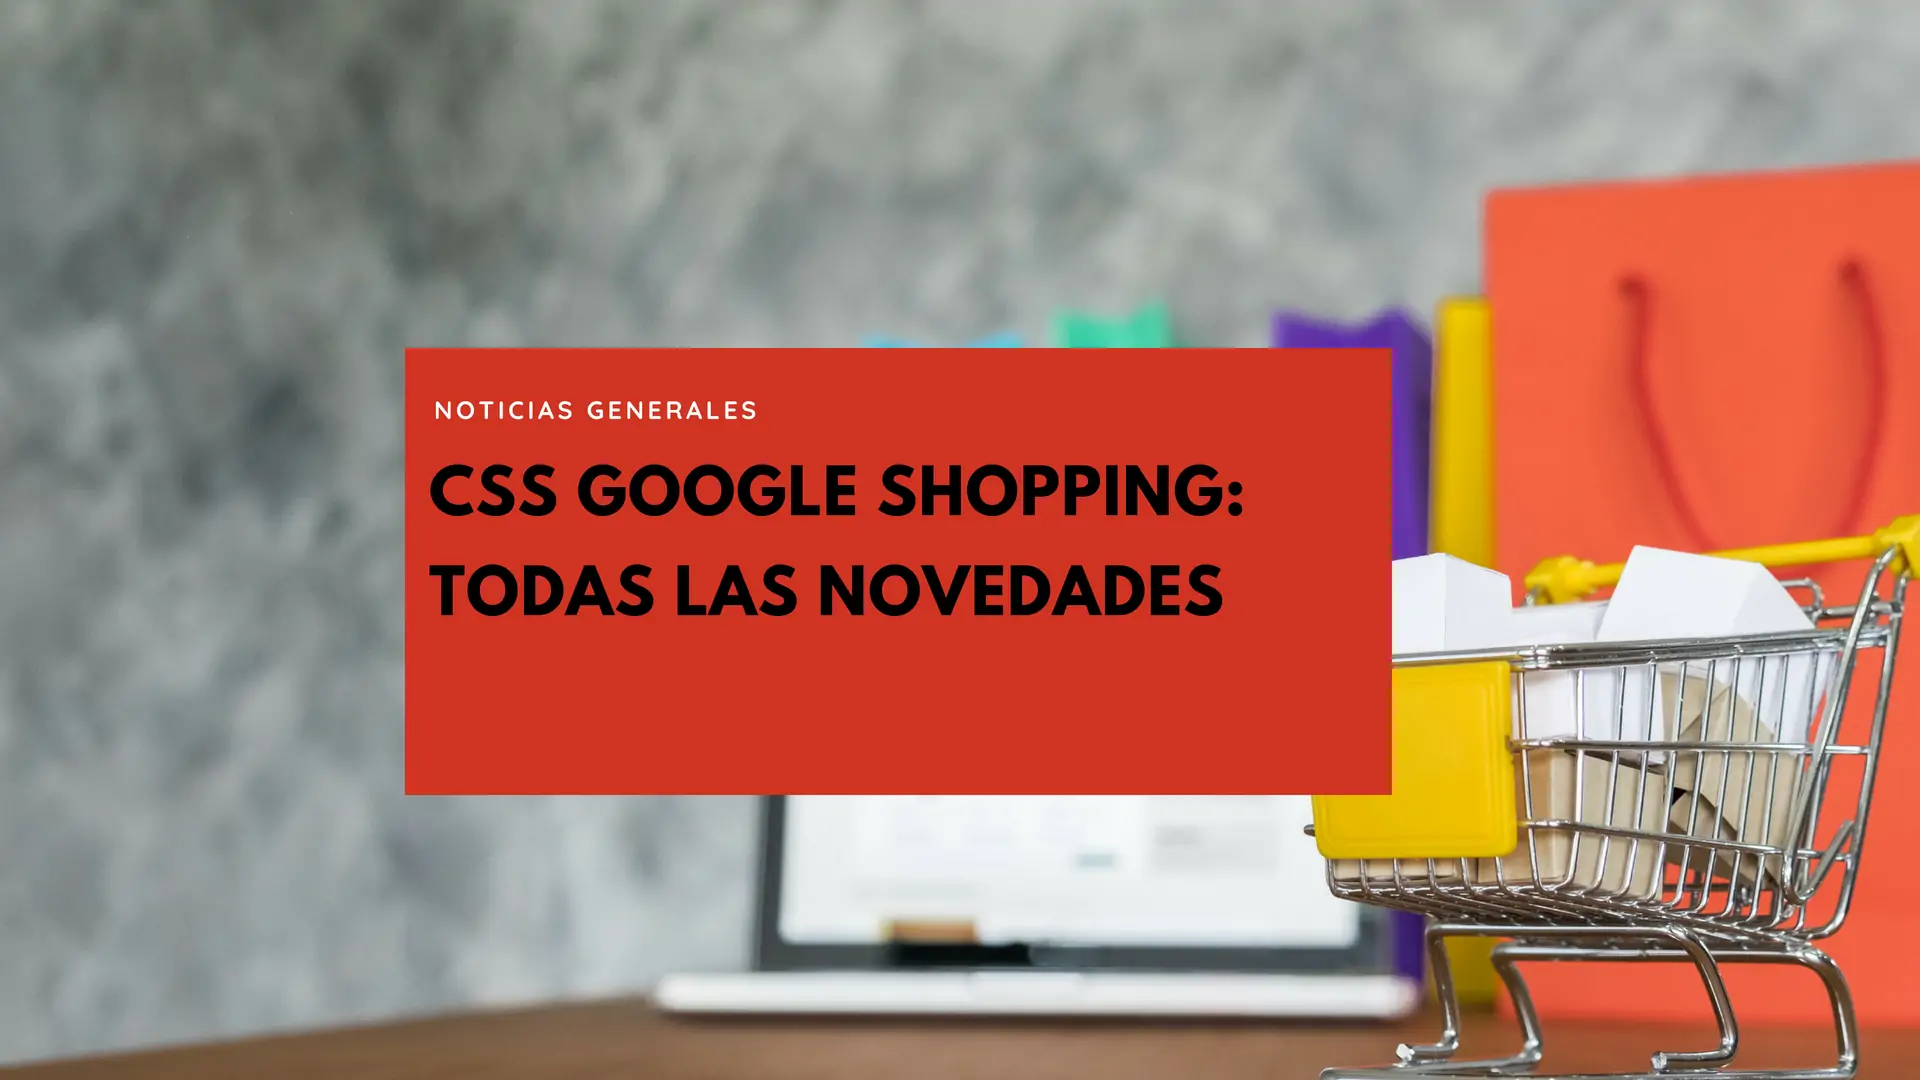 Google Shopping CSS News